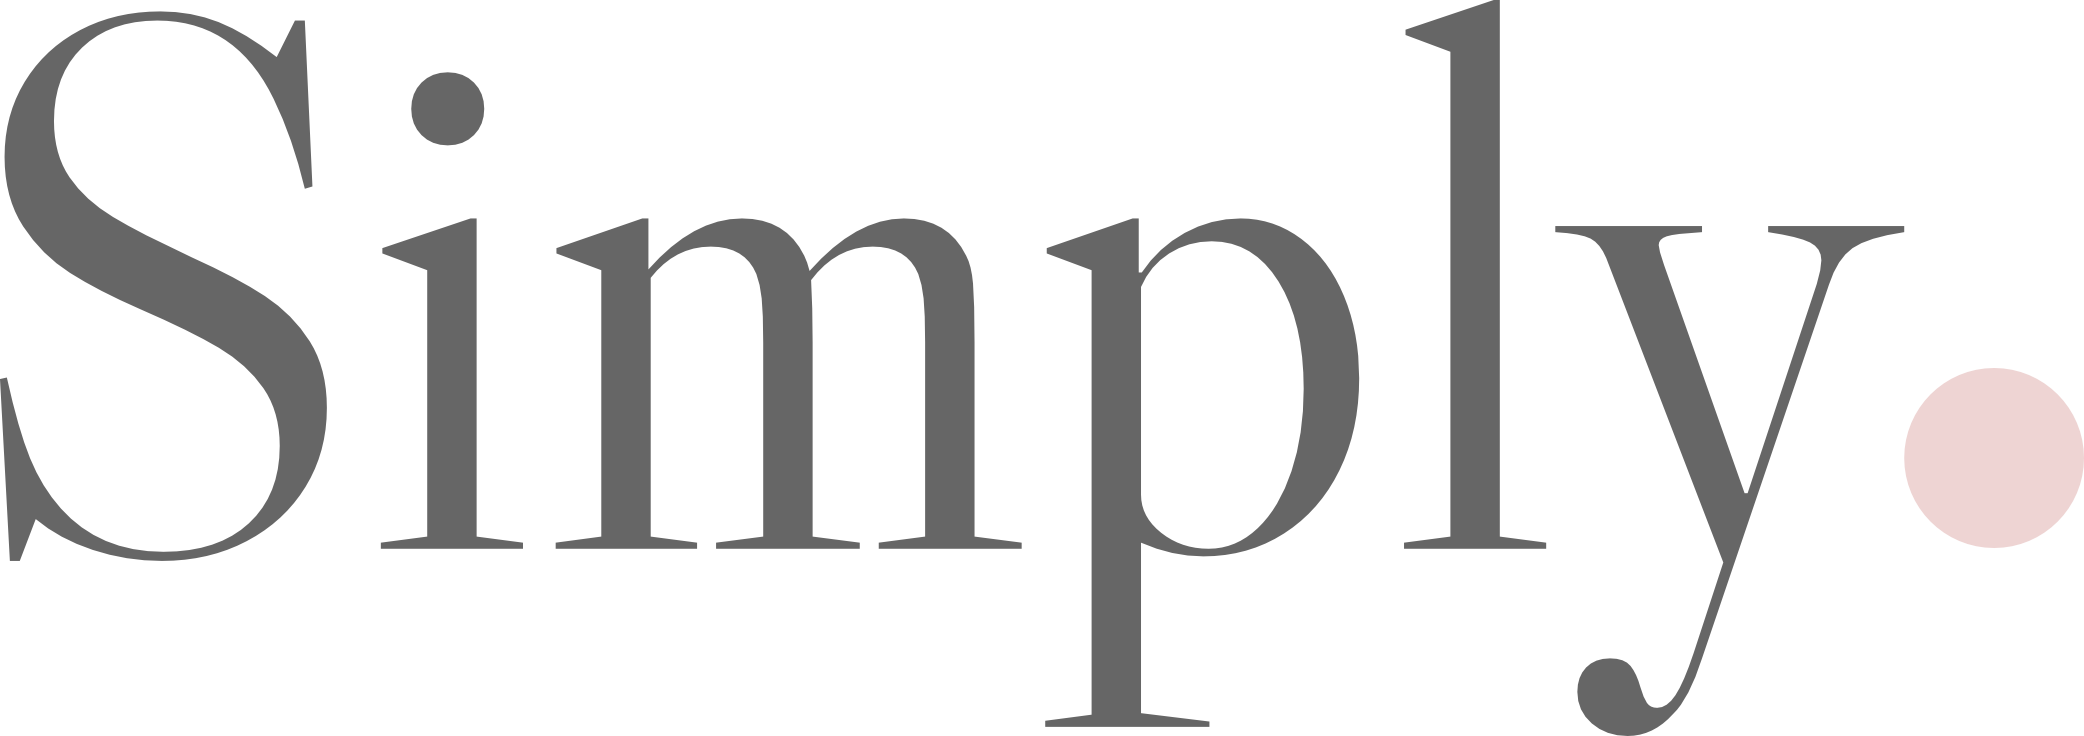 Logo Simply_by AMcreation